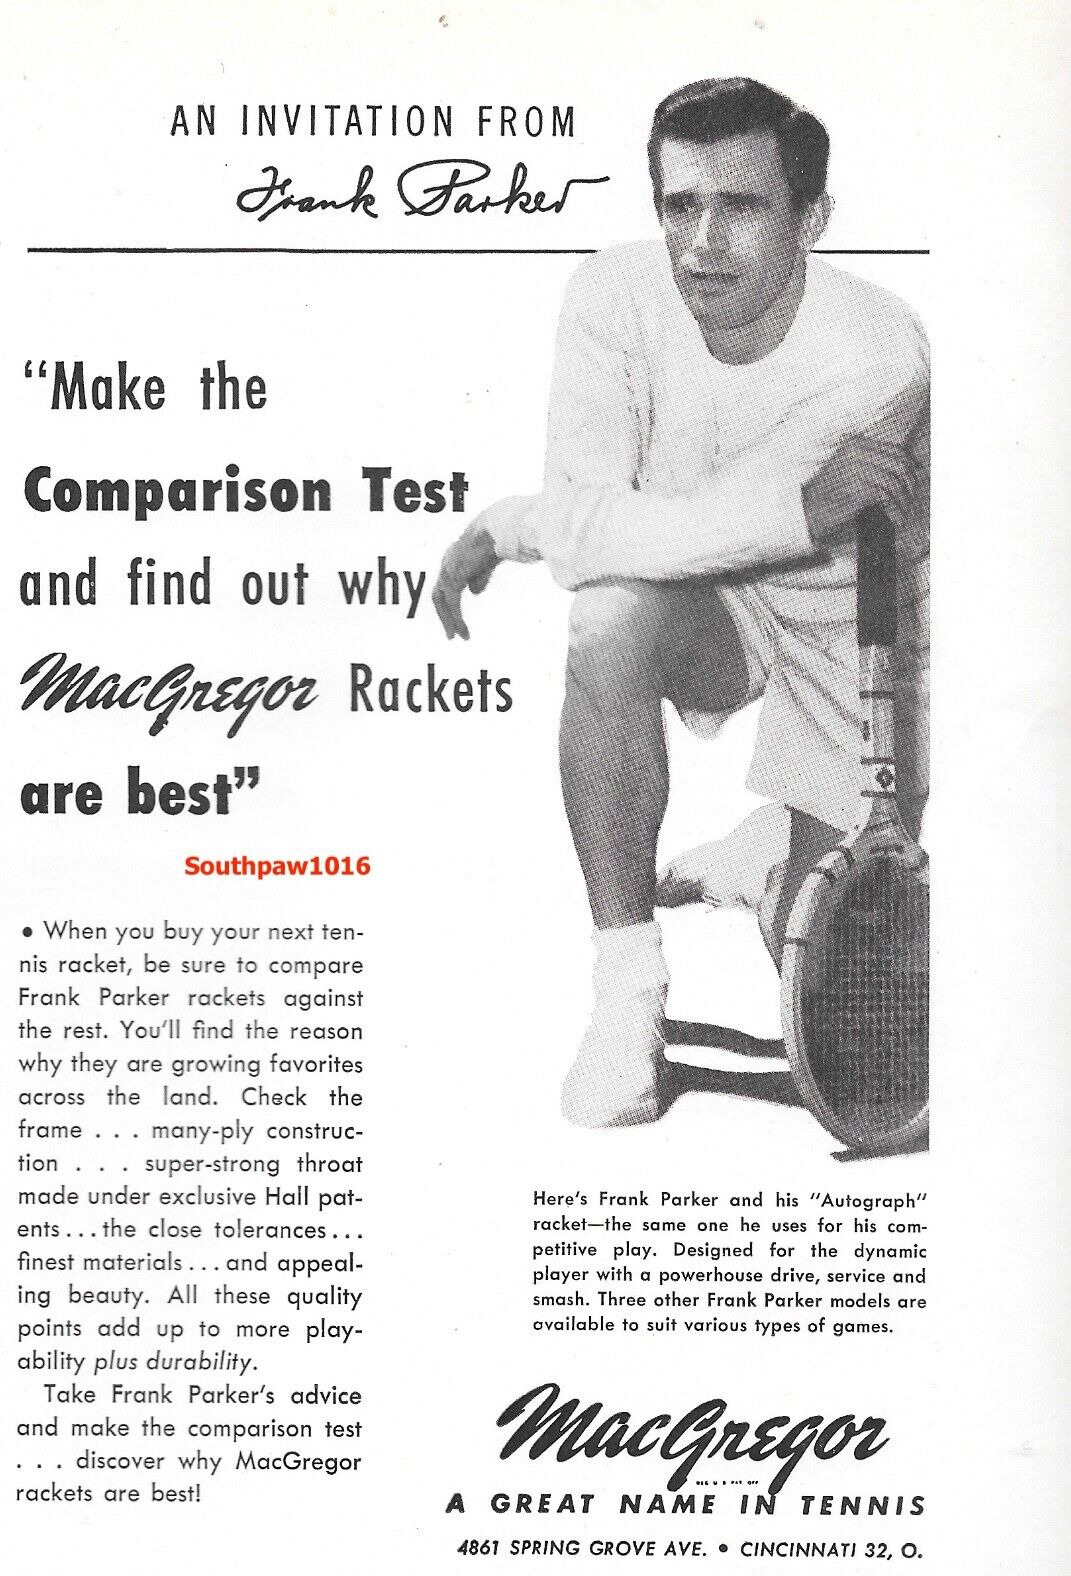 1951 MacGregor Tennis \'Frank Parker Autograph\' Racket Original Print Advert.